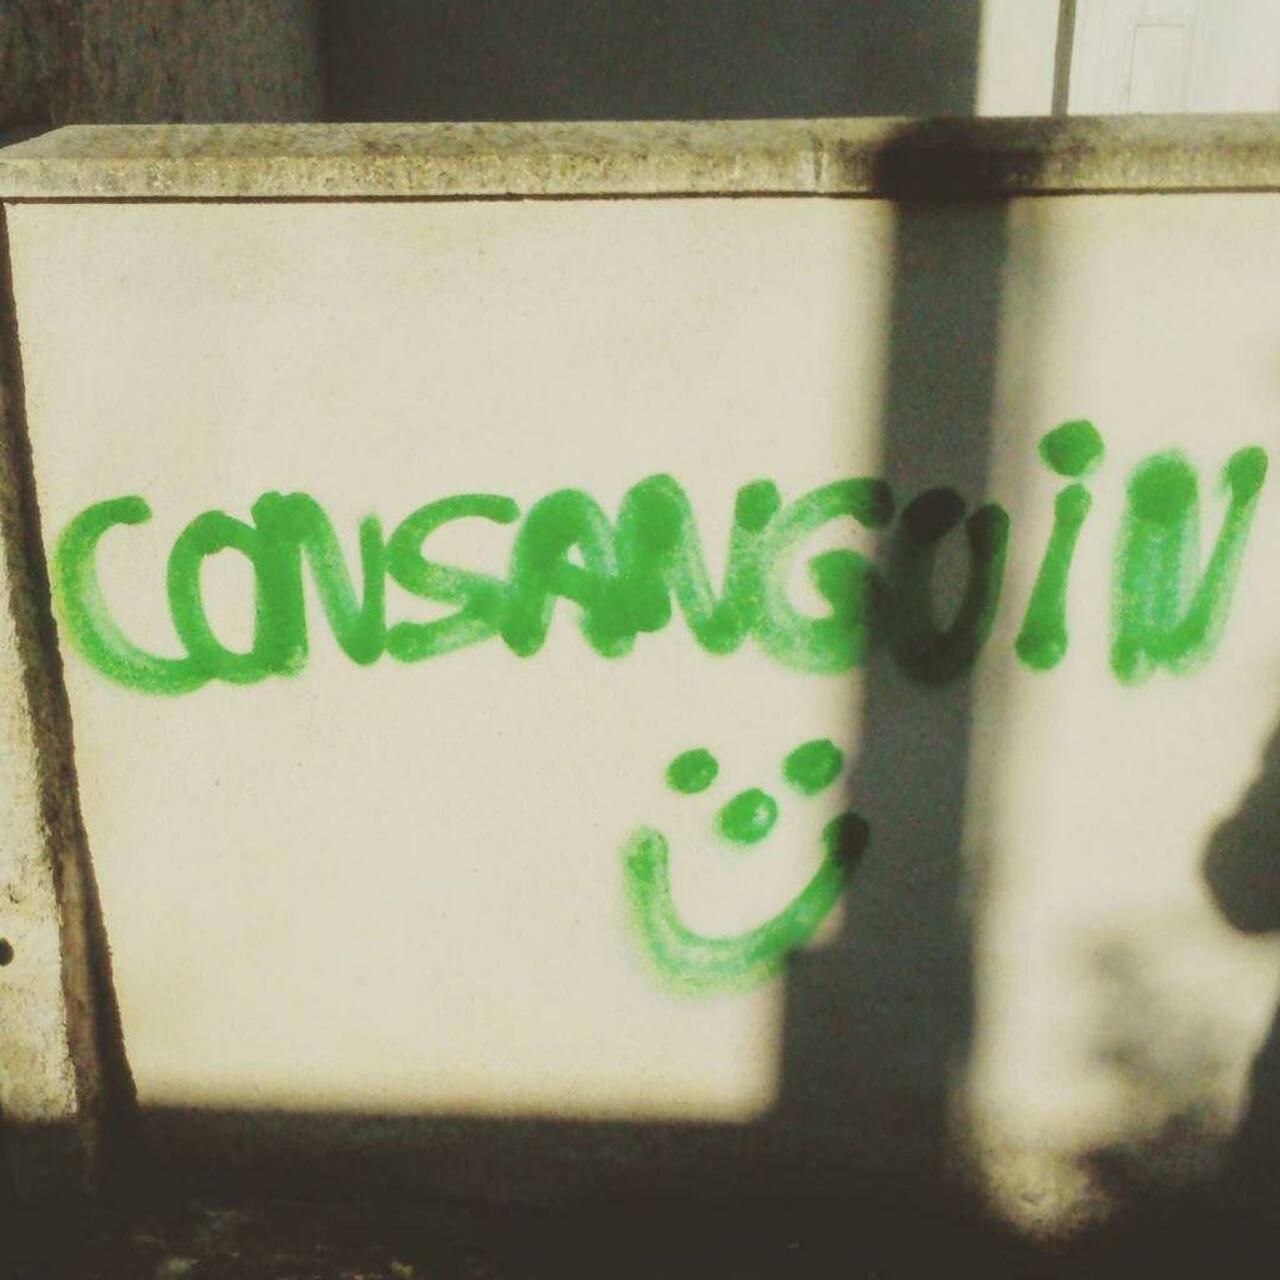 RT @artpushr: via #gizmopedia "http://bit.ly/1LrJbCo" #graffiti #streetart http://t.co/hlcKPyO6XU